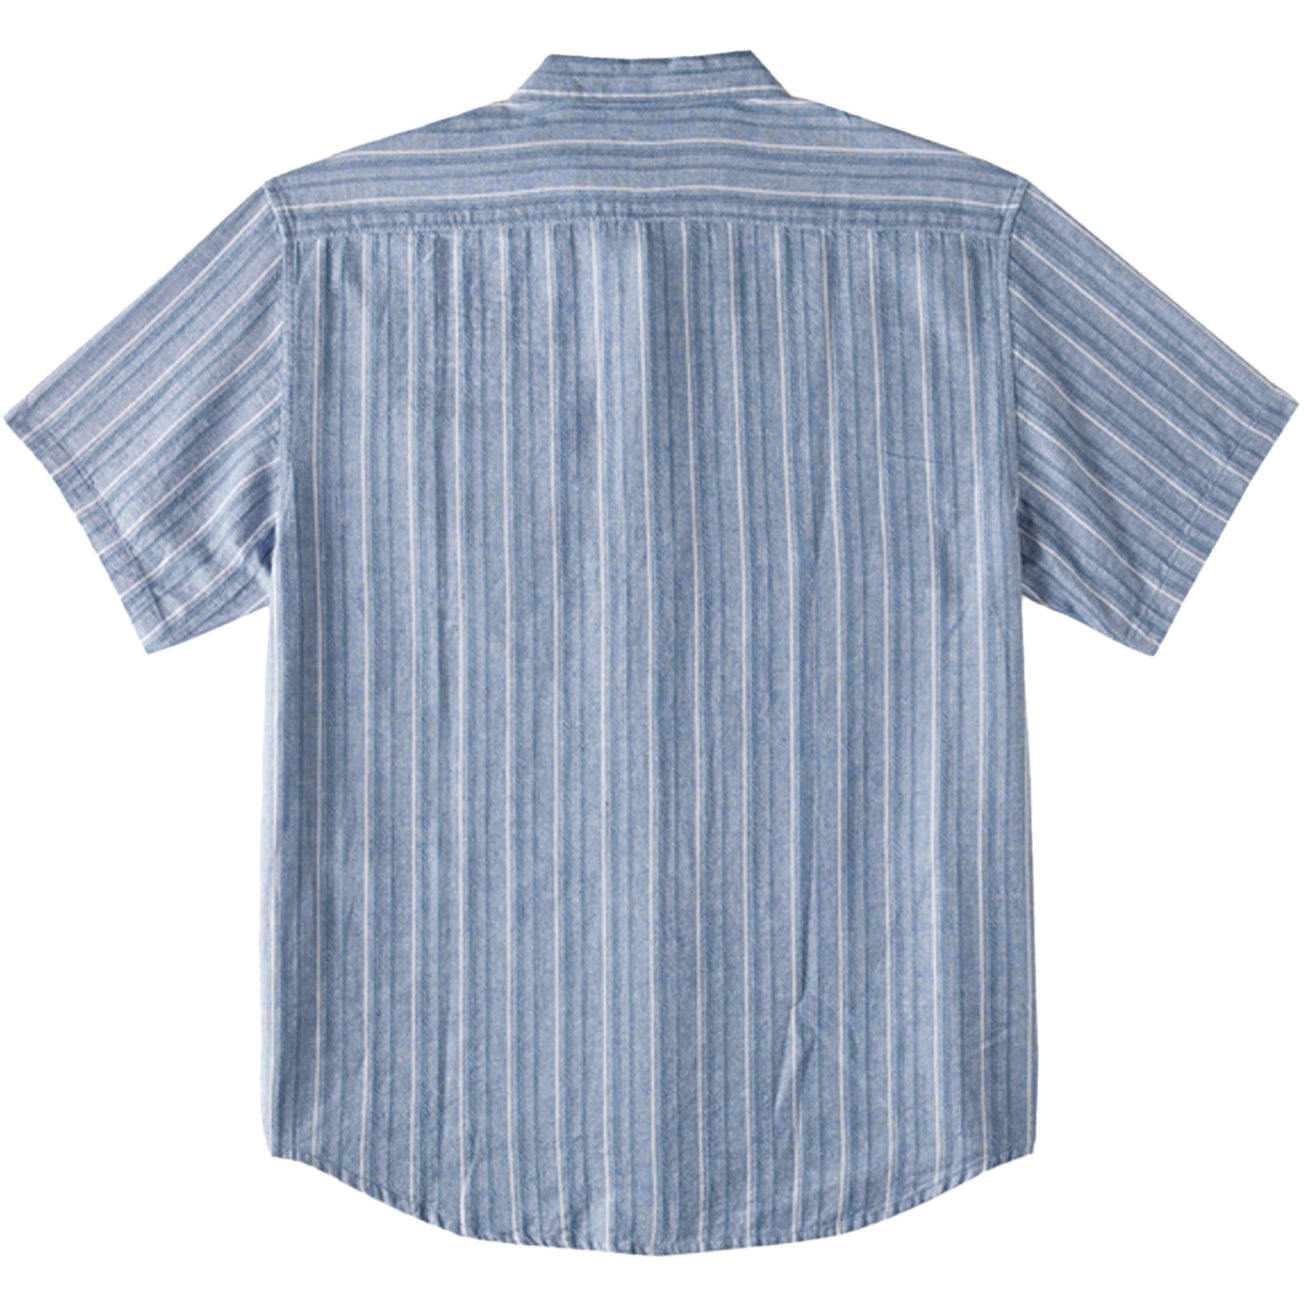 Billabong | Shirt All Day Stripe - Vintage Indigo